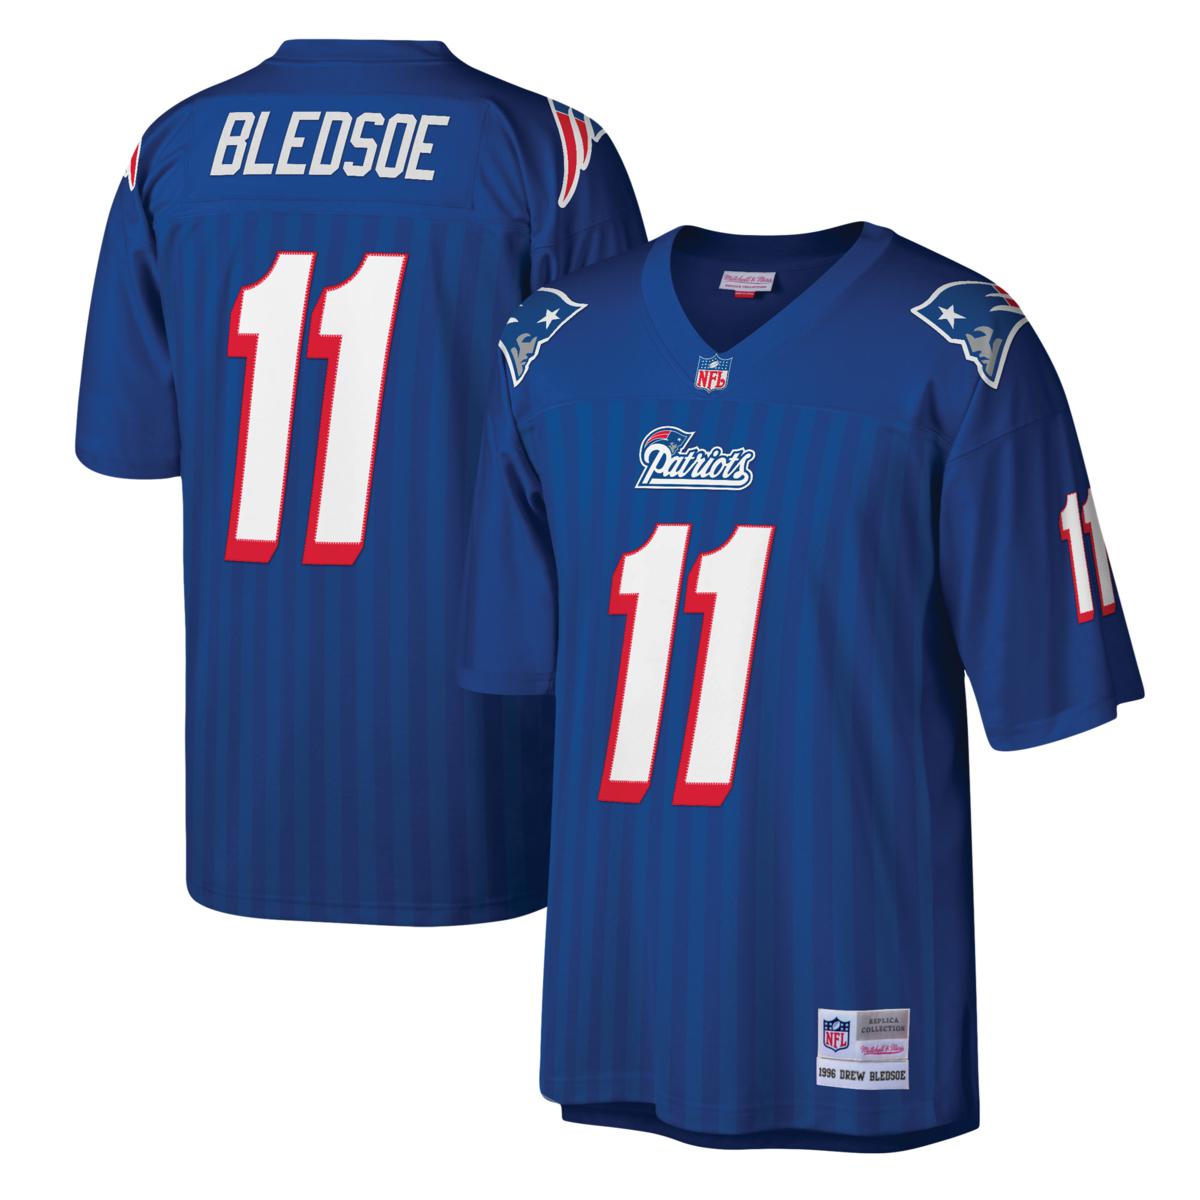 Officially Licensed NFL New England Patriots Men's Drew Bledsoe Jersey